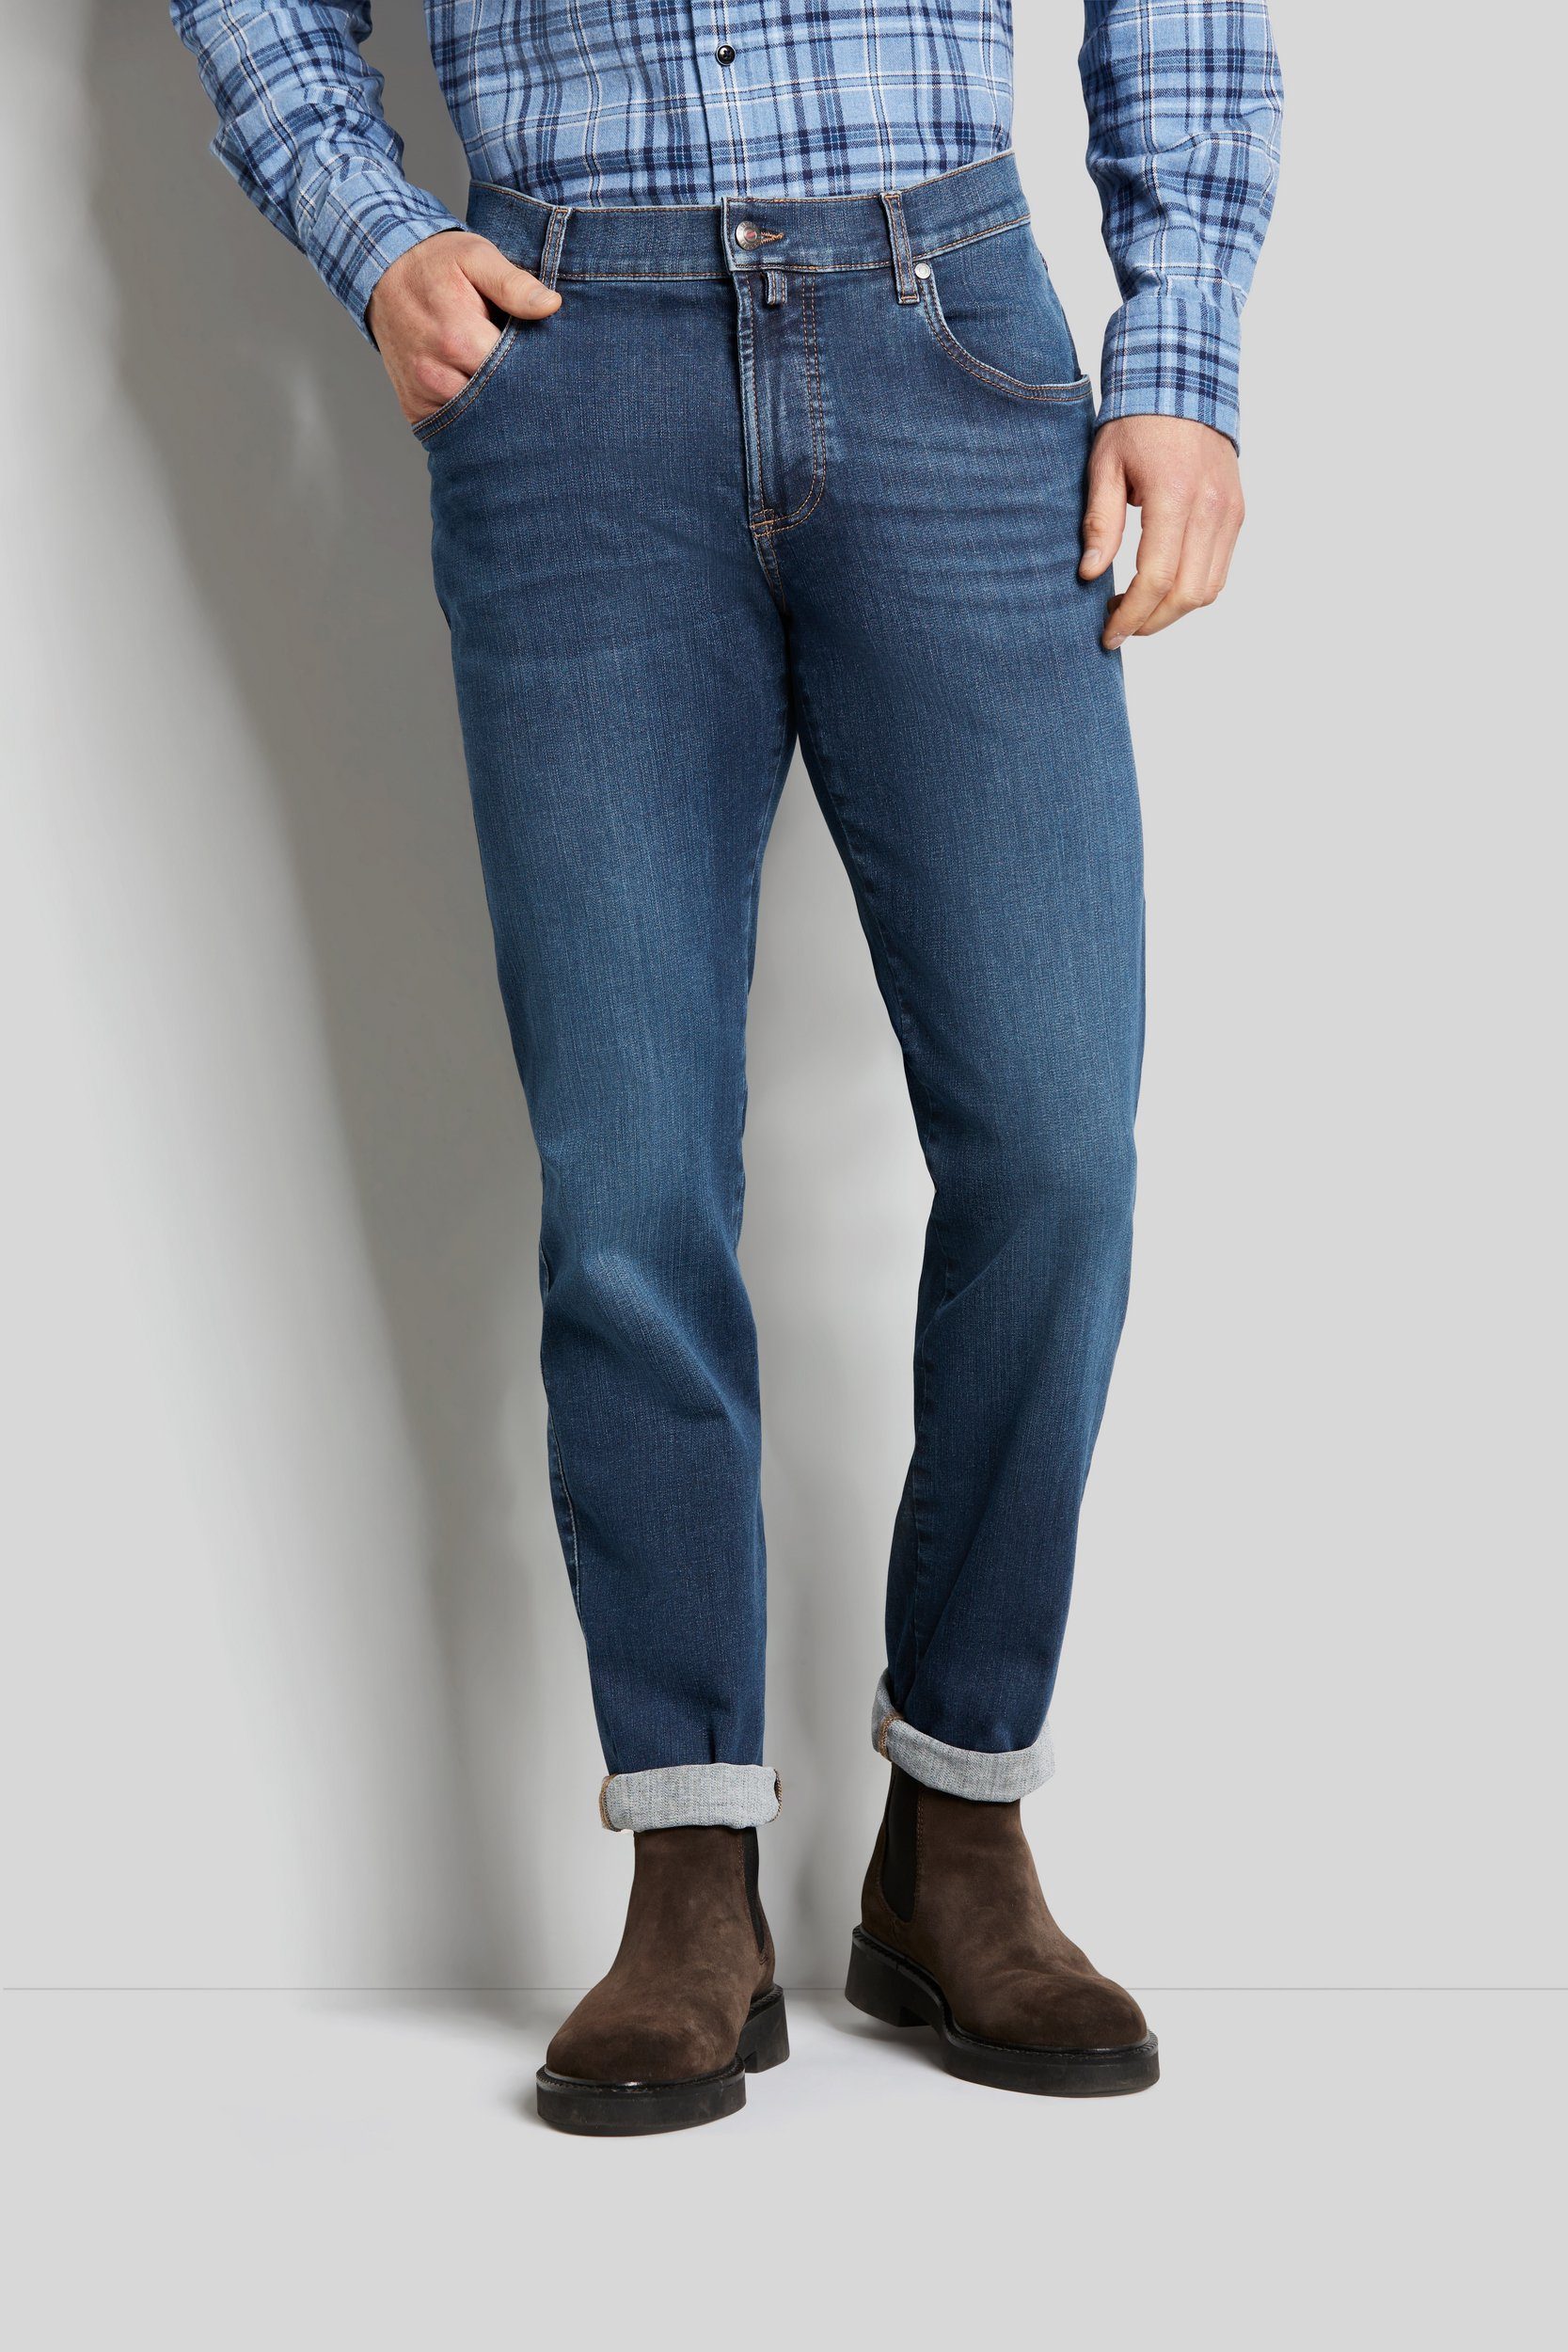 mit Tragekomfort Denim Flexcity blau hohem bugatti 5-Pocket-Jeans